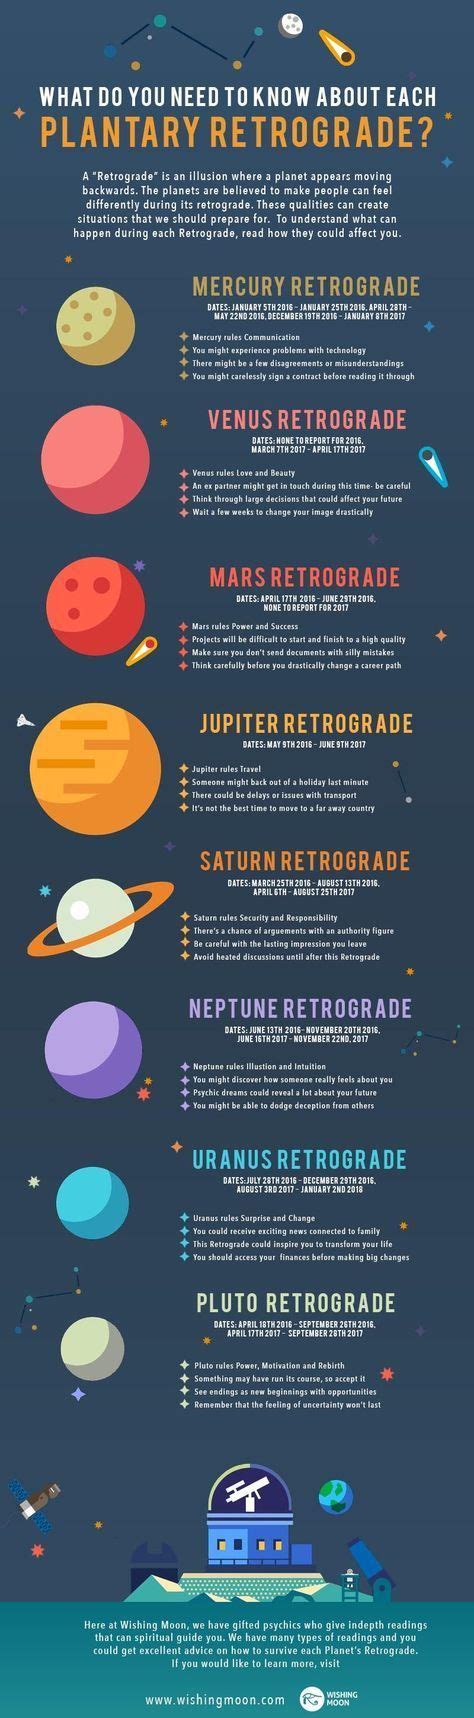 Saturn Retrograde Birth Chart